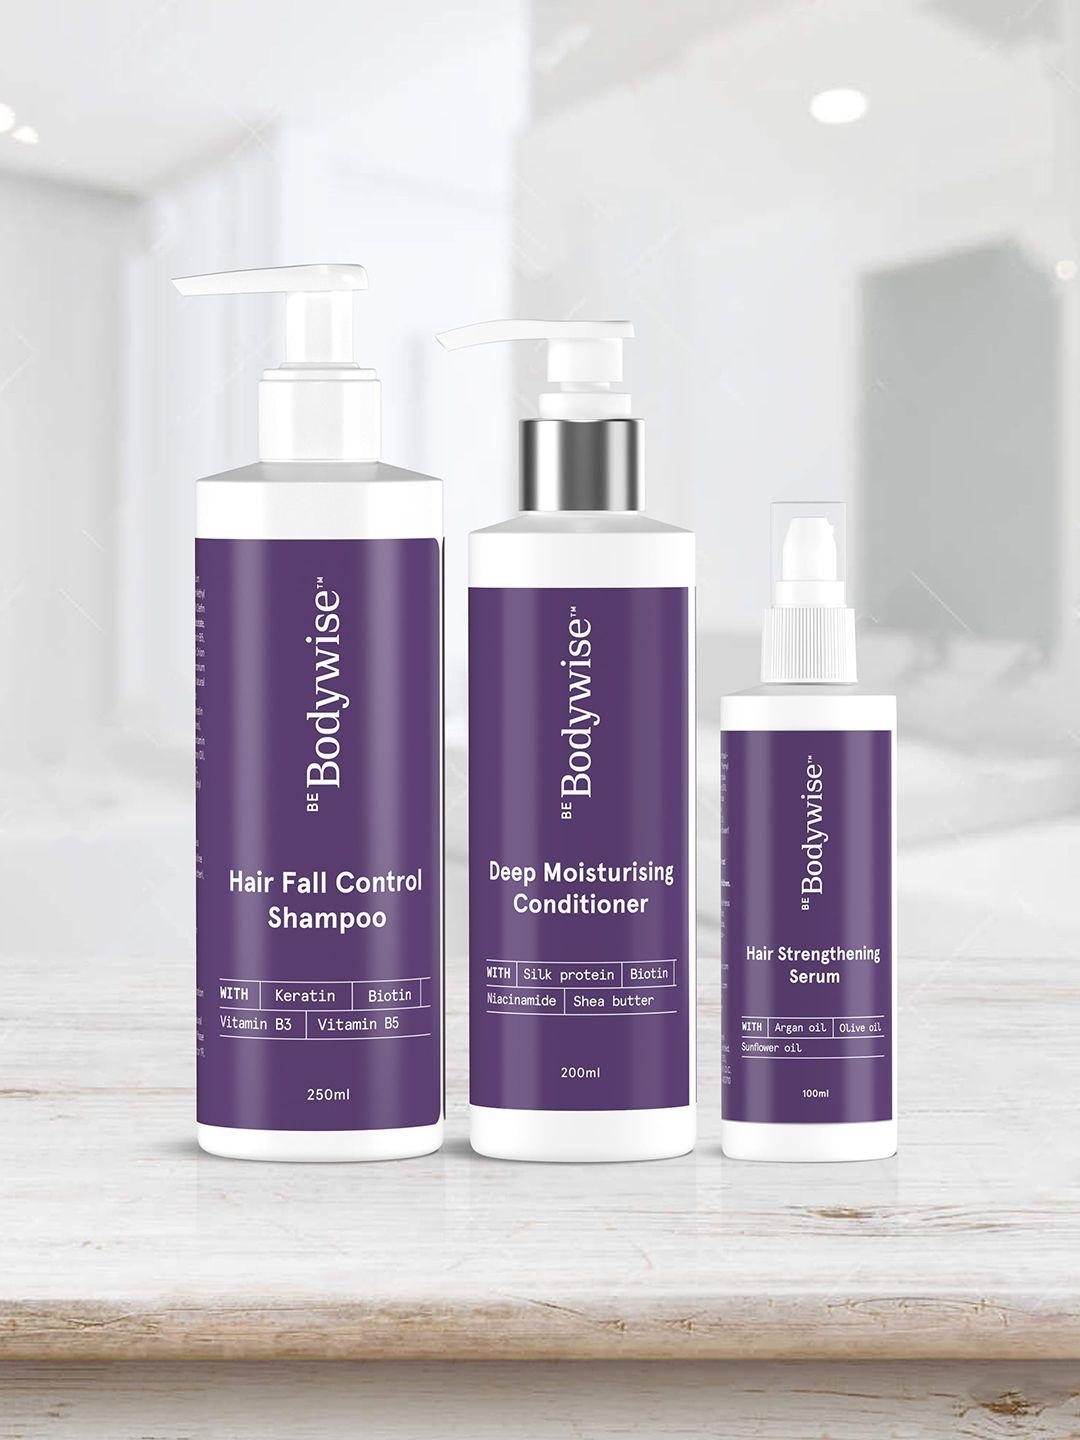 be bodywise hair care necessities kit - keratin shampoo, conditioner, hair serum